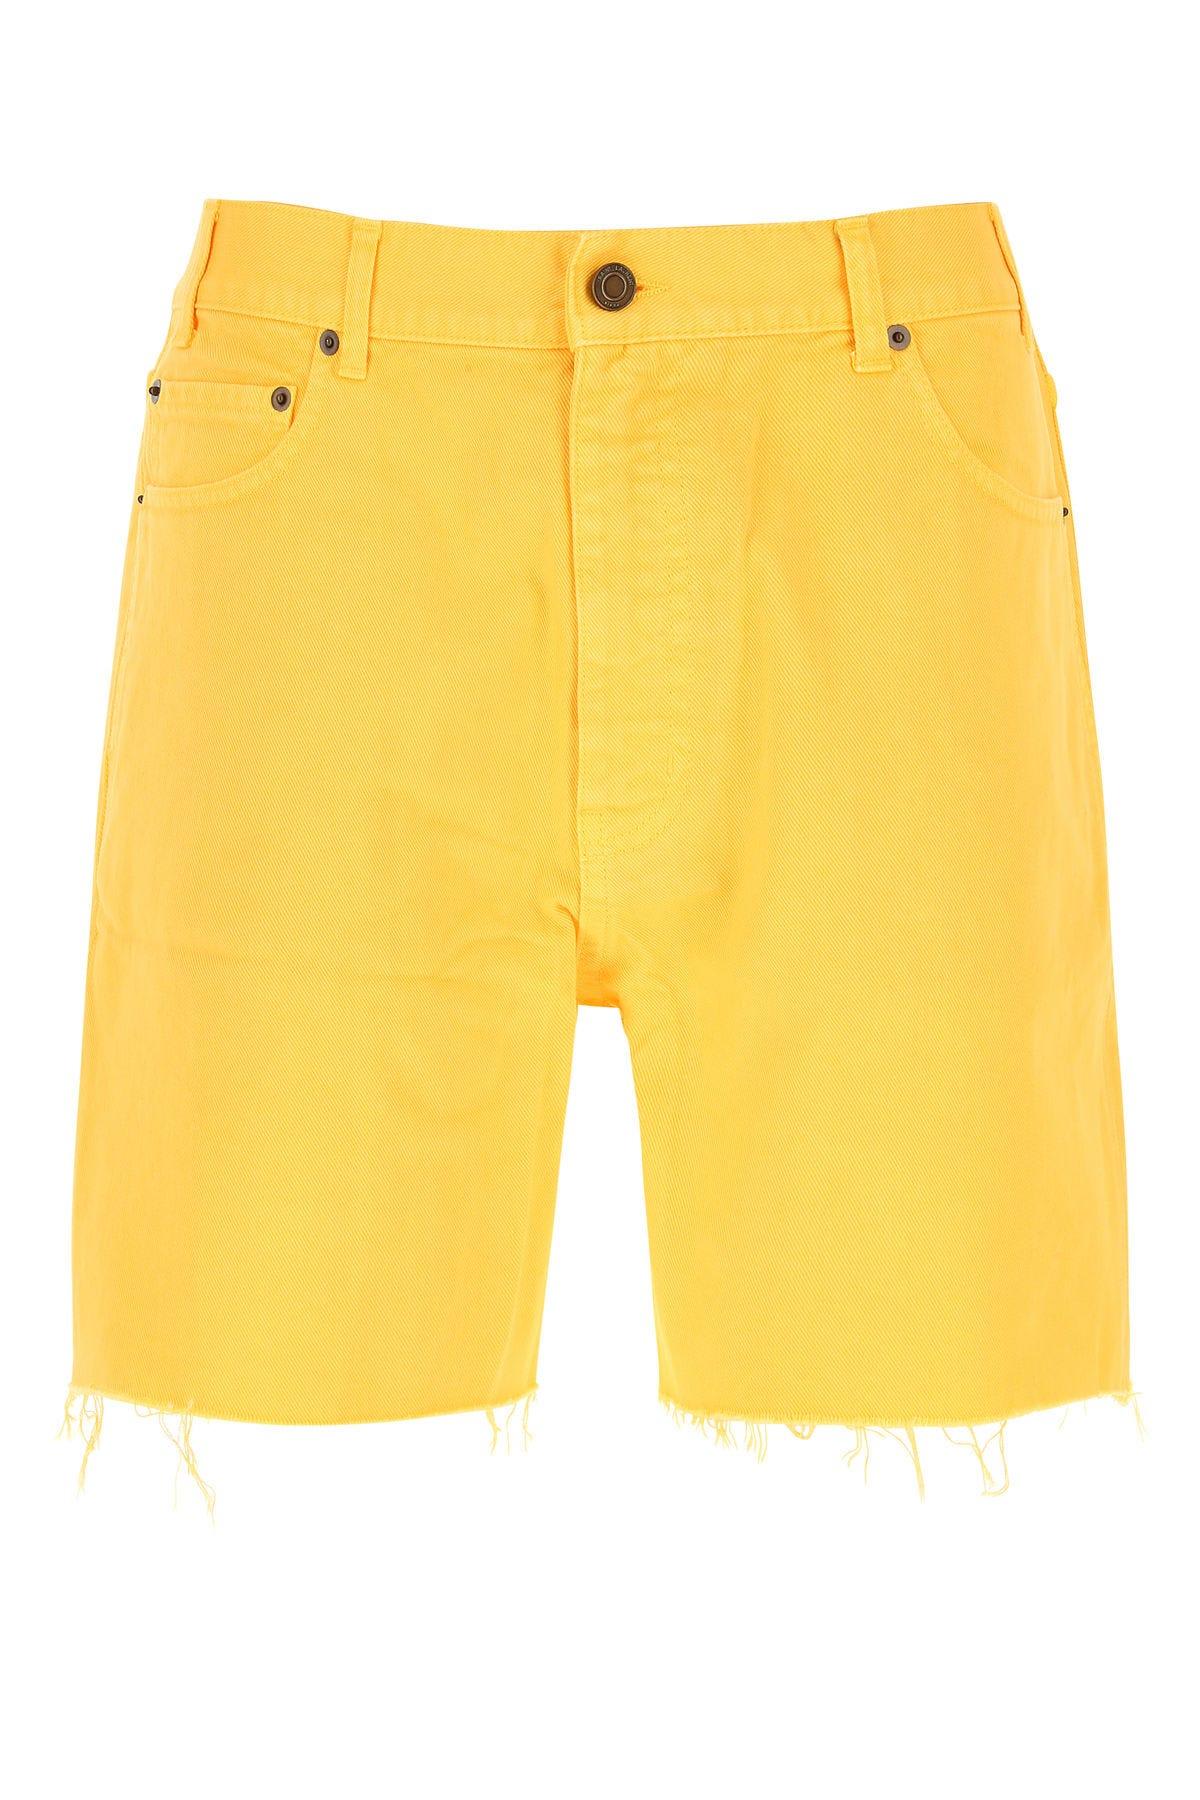 Saint Laurent Yellow Denim Bermuda Shorts